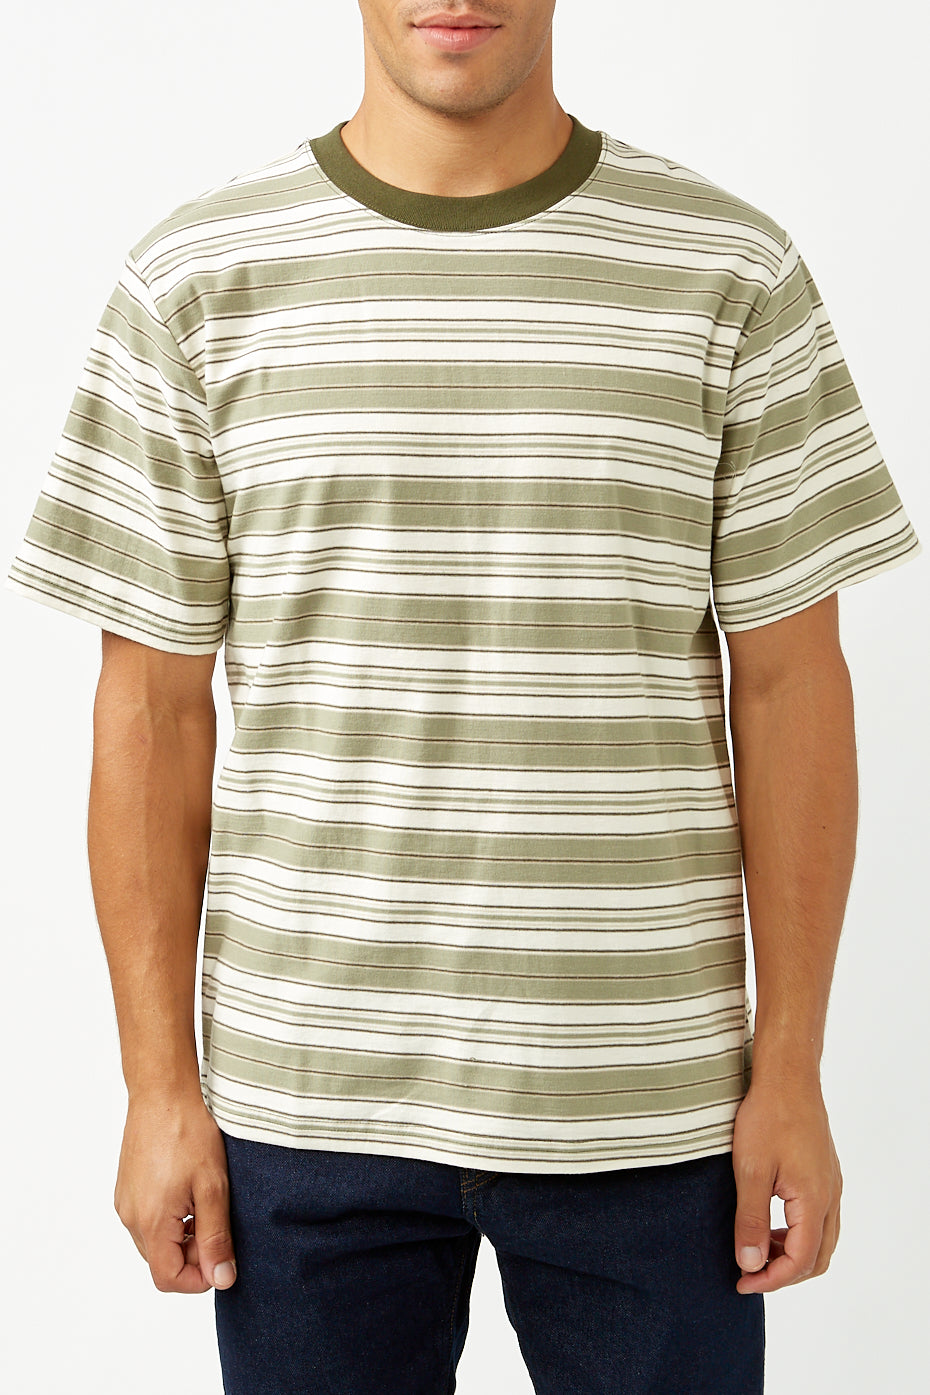 Rhythm. Olive Vintage Stripe T-shirt